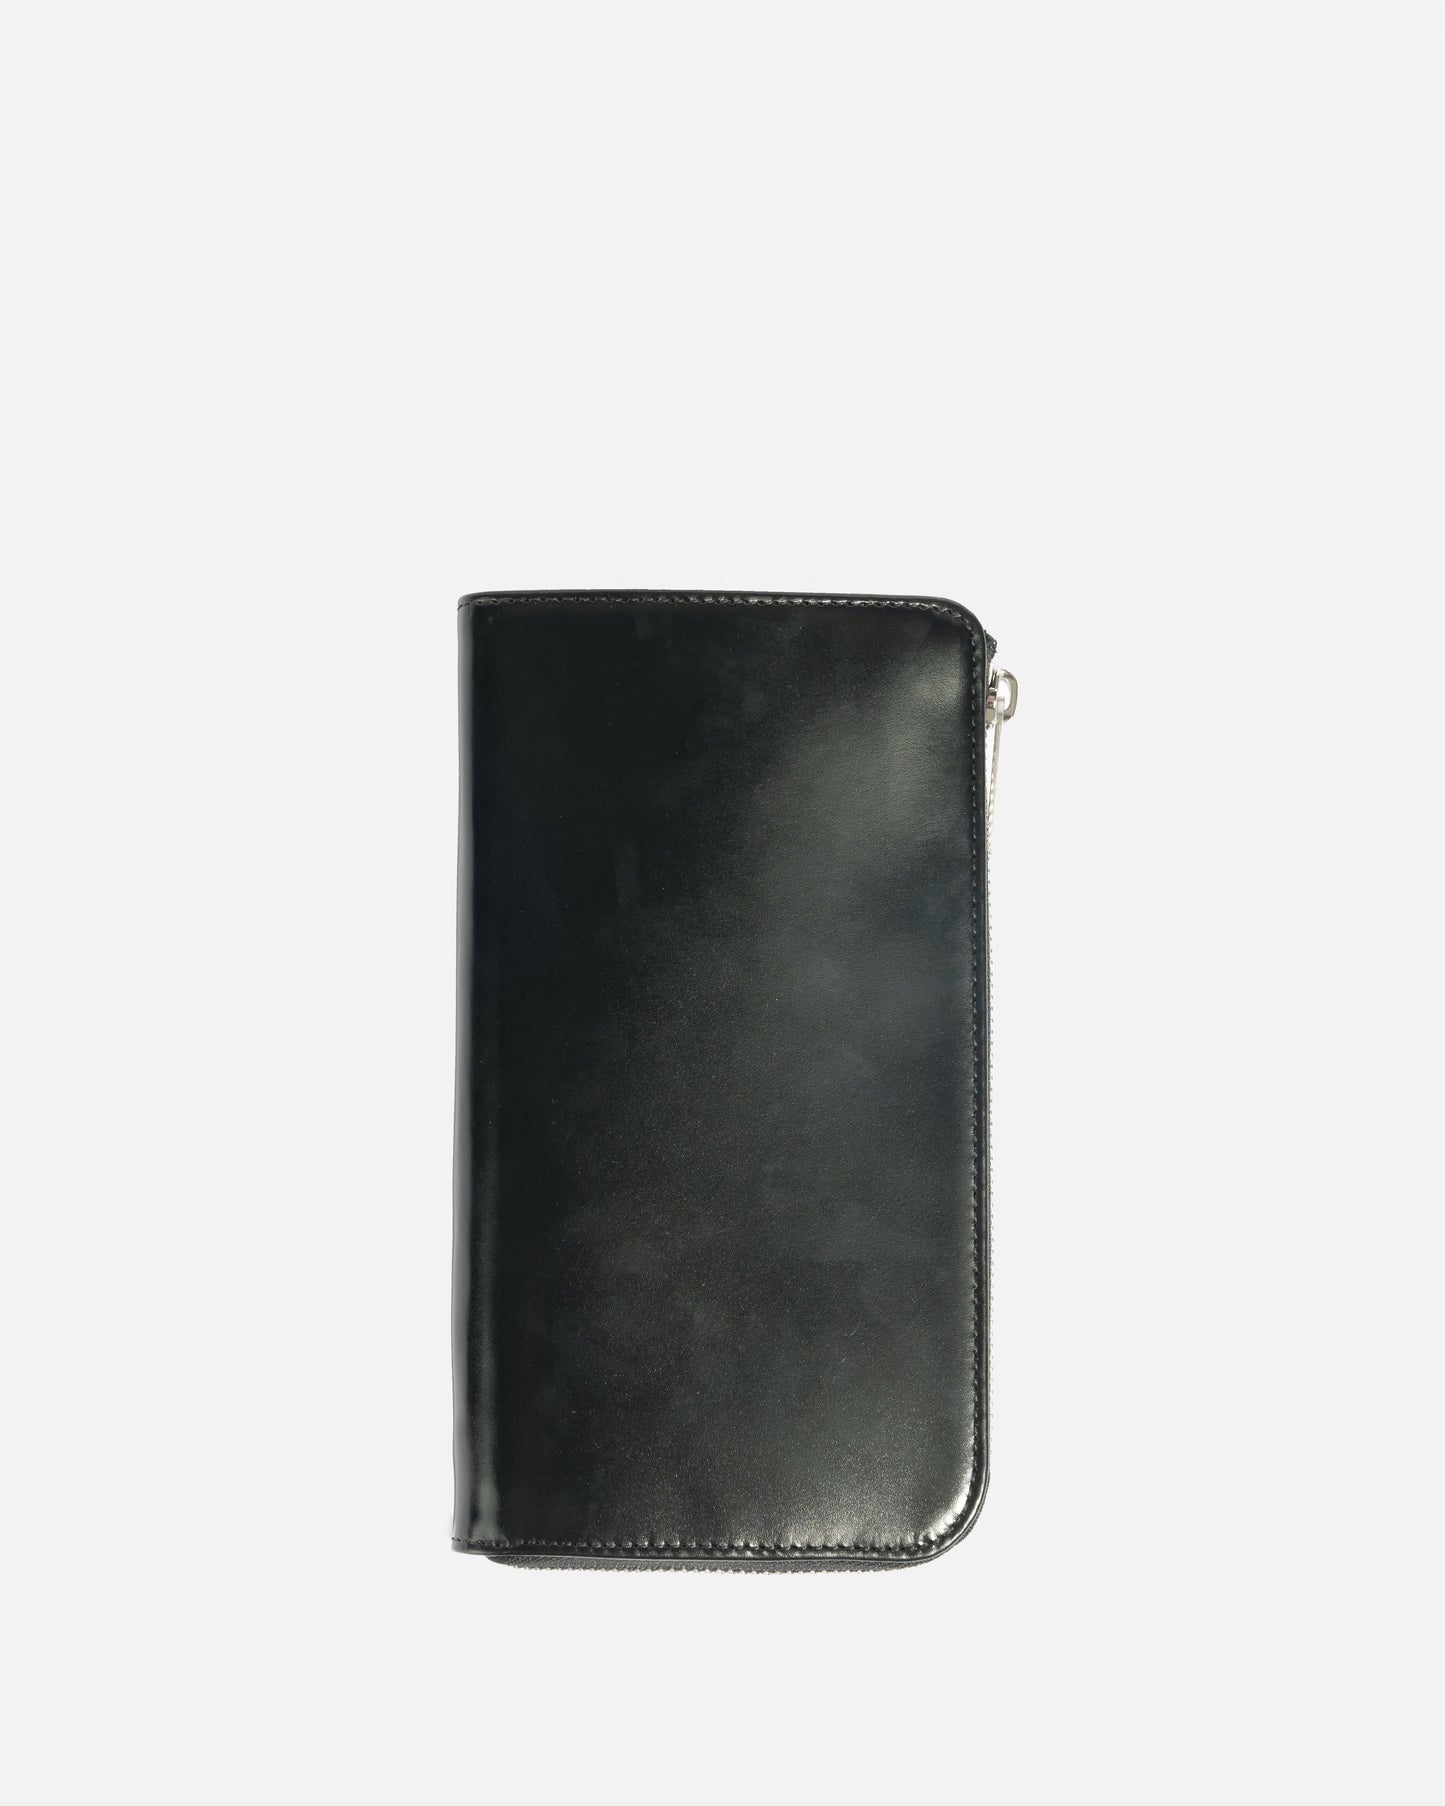 Maison Margiela Leather Goods Long Zip Calfskin Wallet in Black